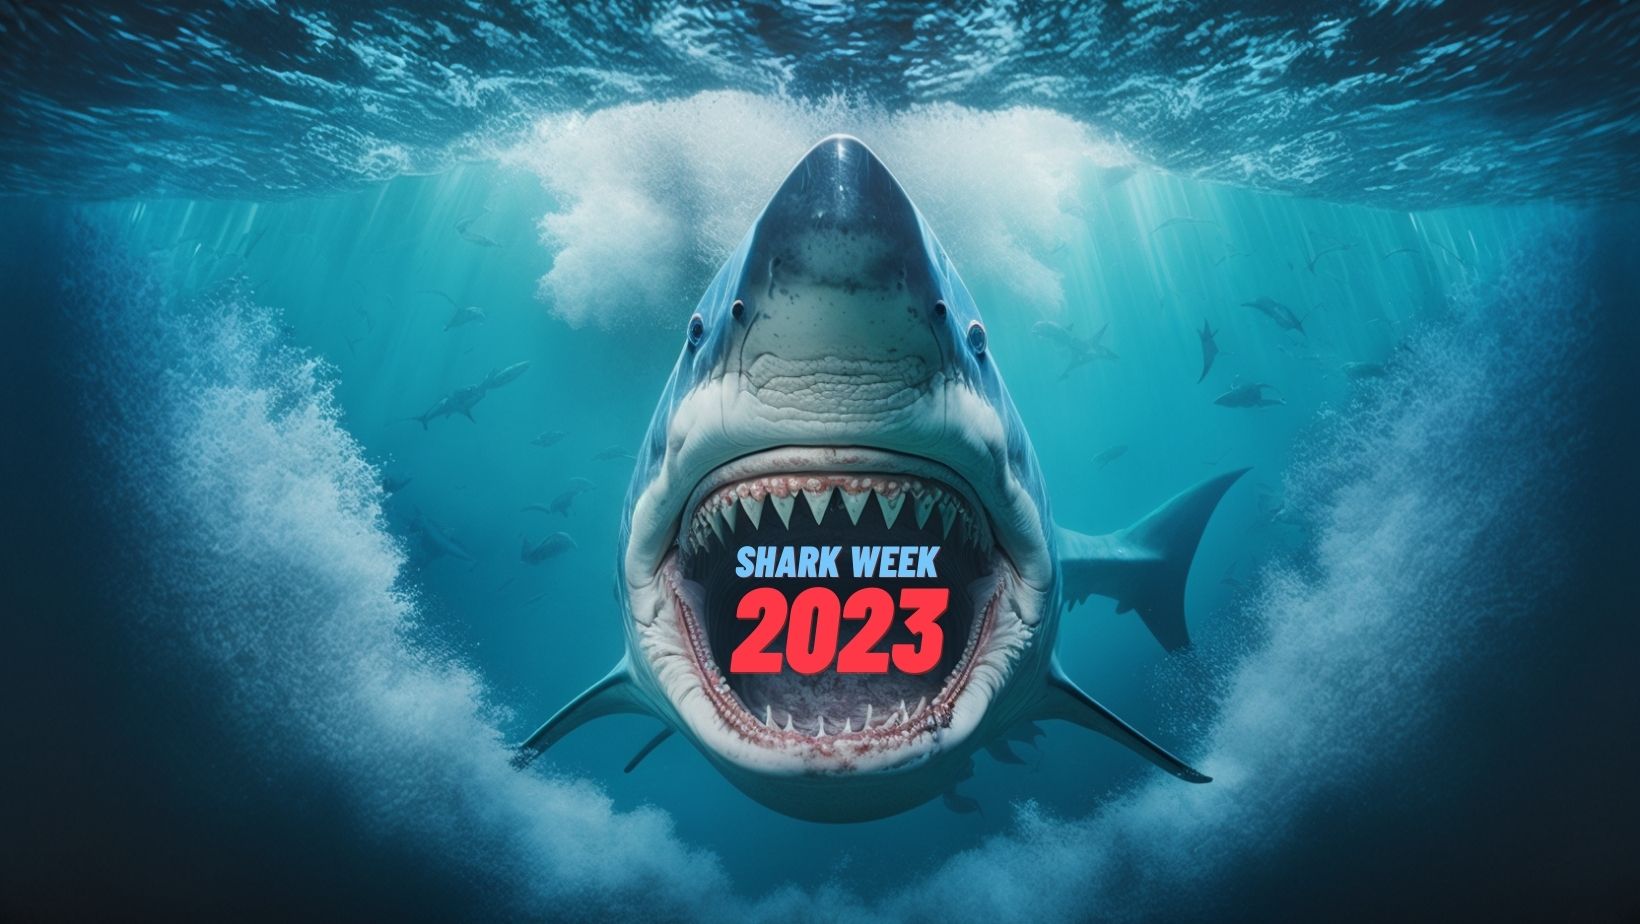 Shark Week 2023 countdown